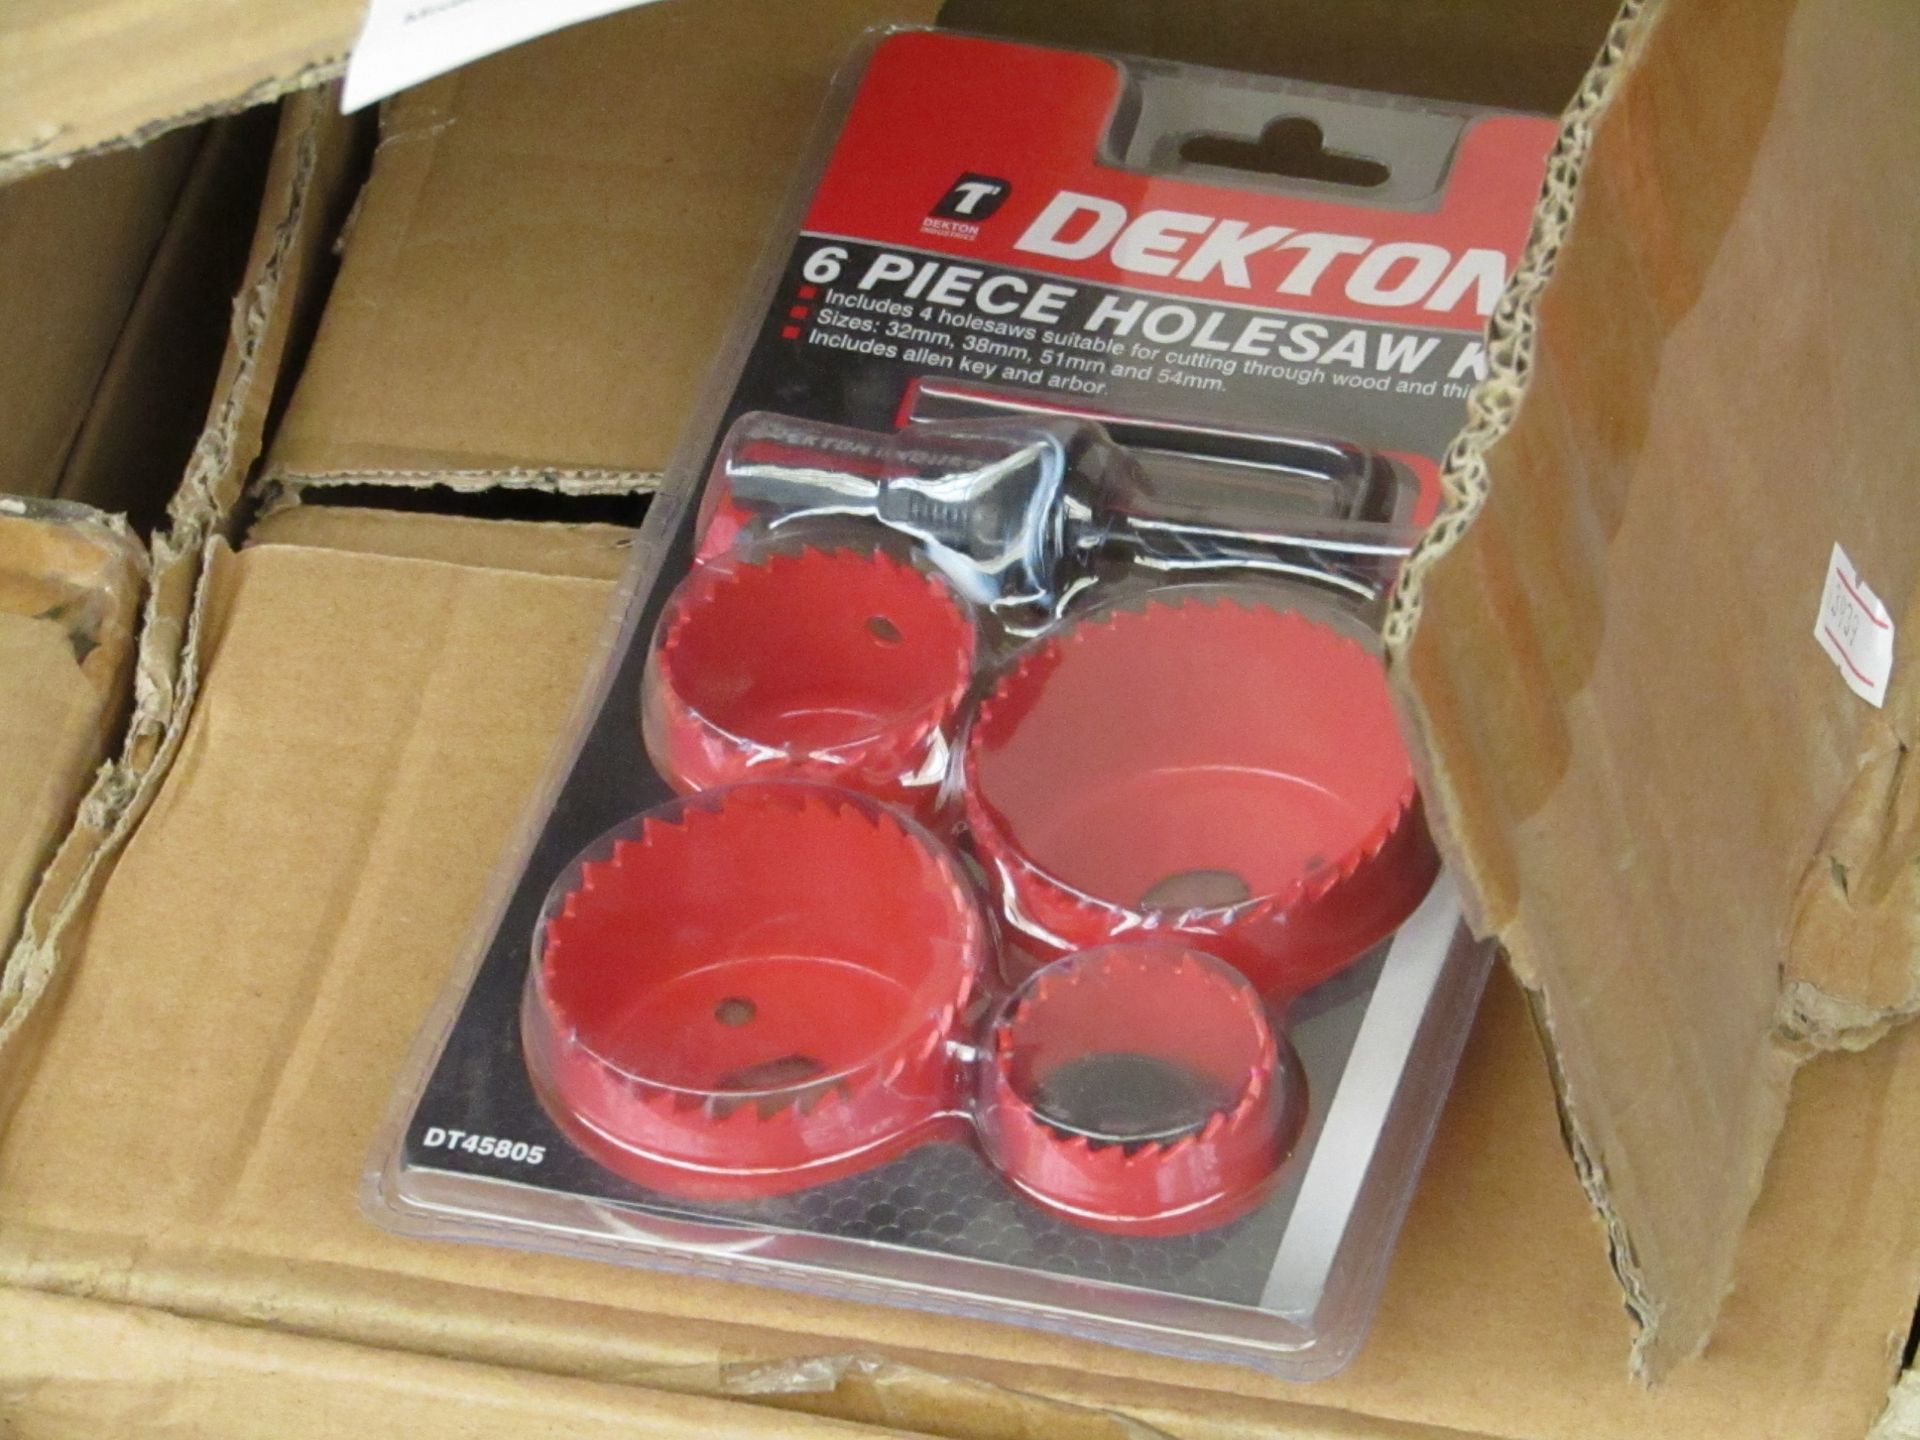 Dekton, 6 piece holesaw kit, new and boxed